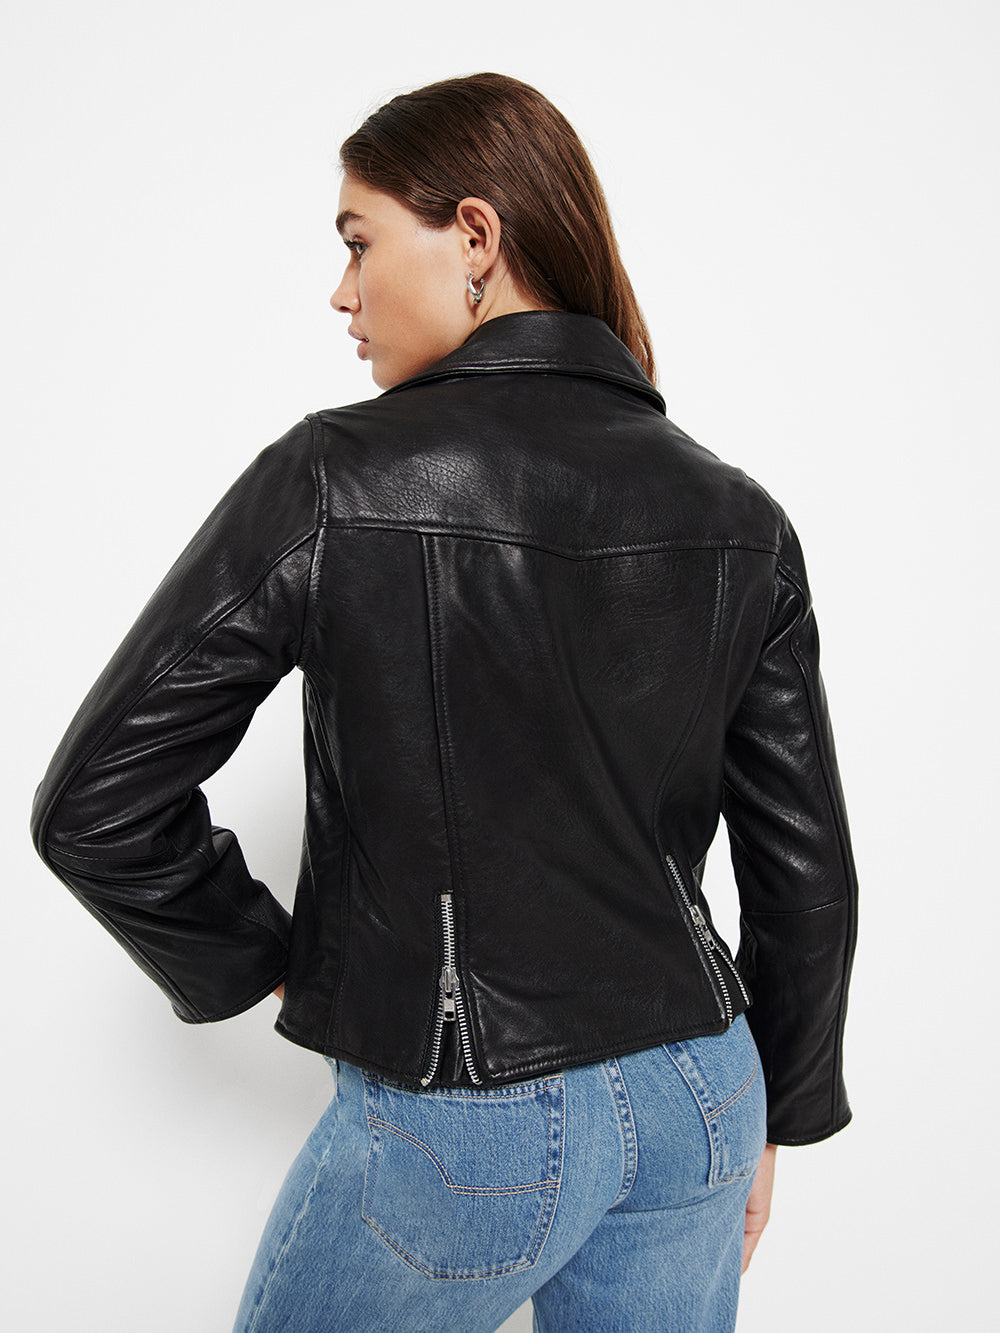 The Leather Biker Jacket